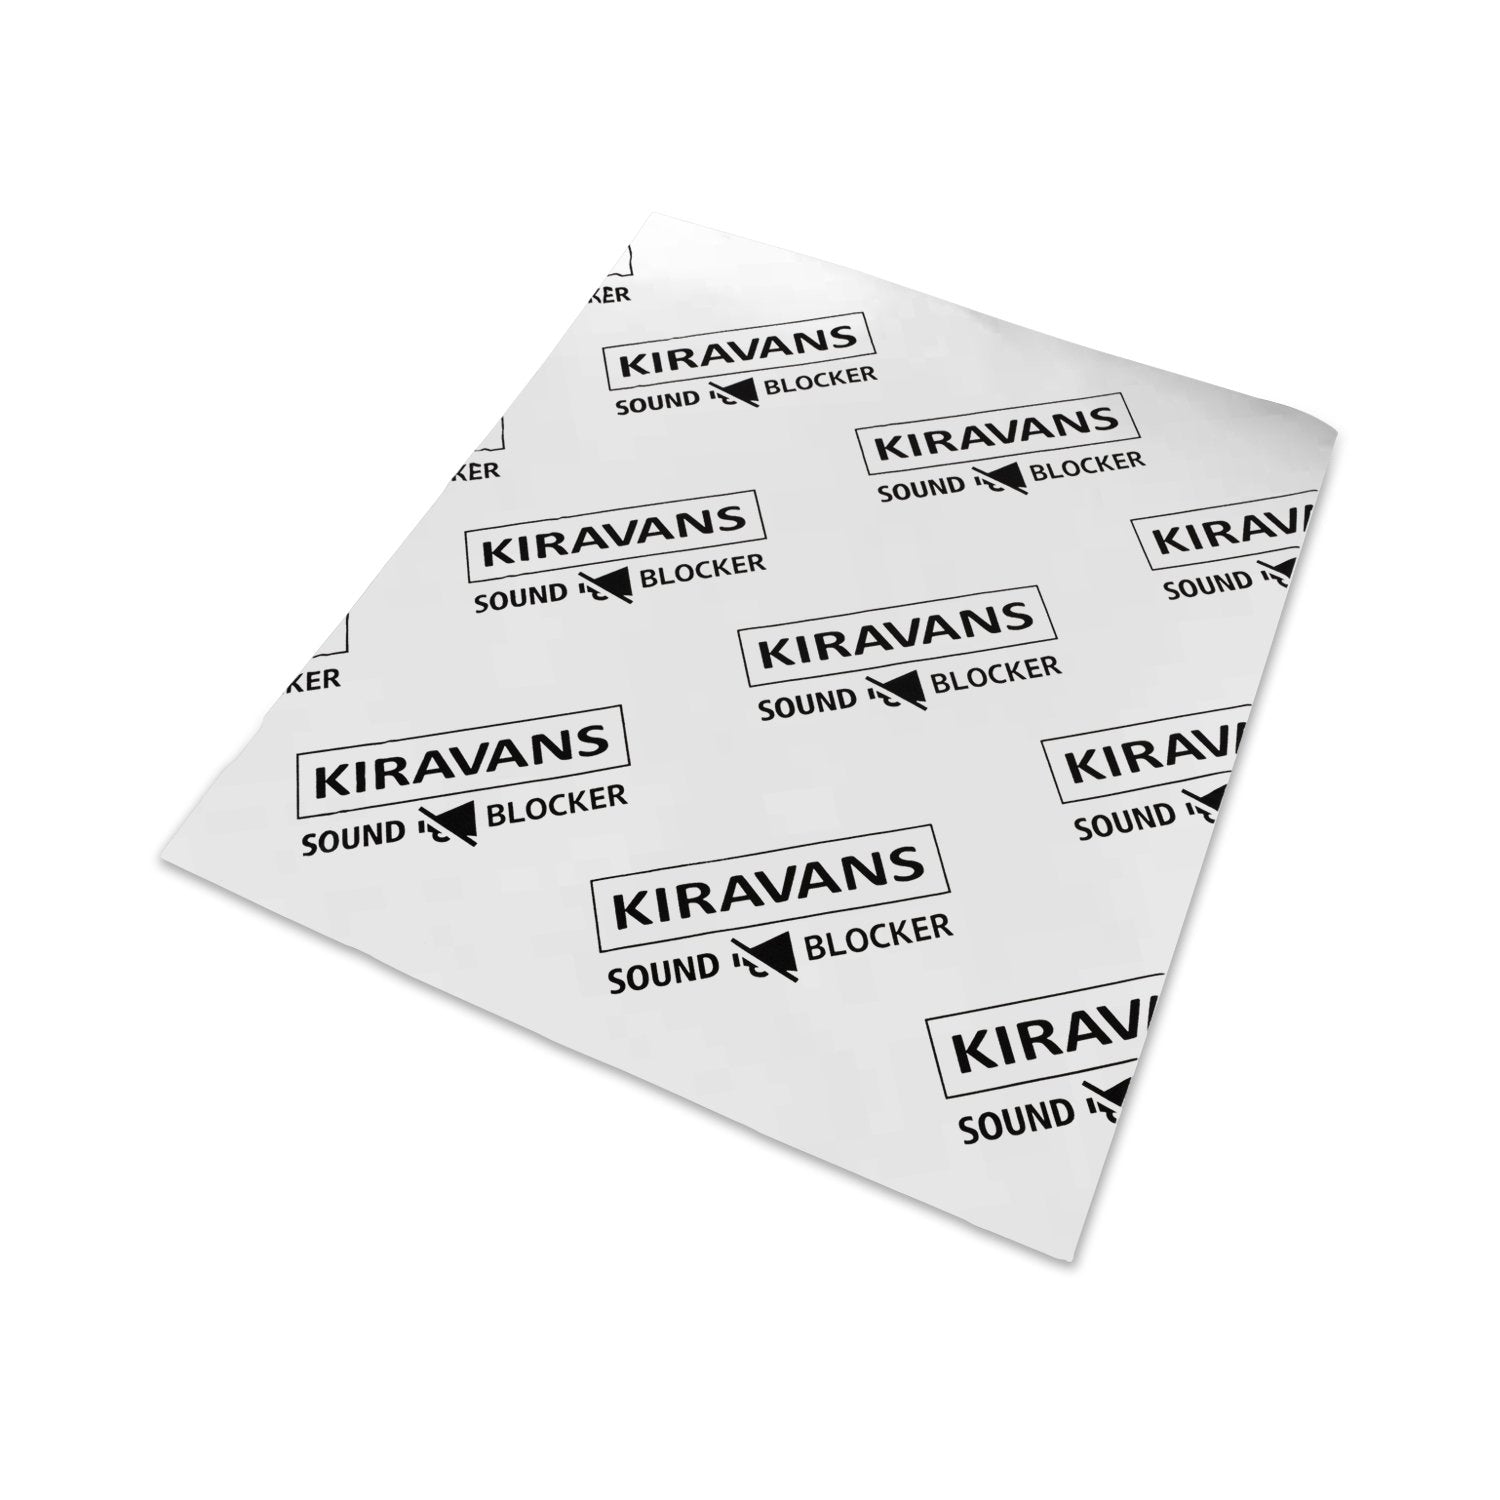 Kiravans Sound Blocker - 2mm Sound Deadening mat Designed by Kiravans